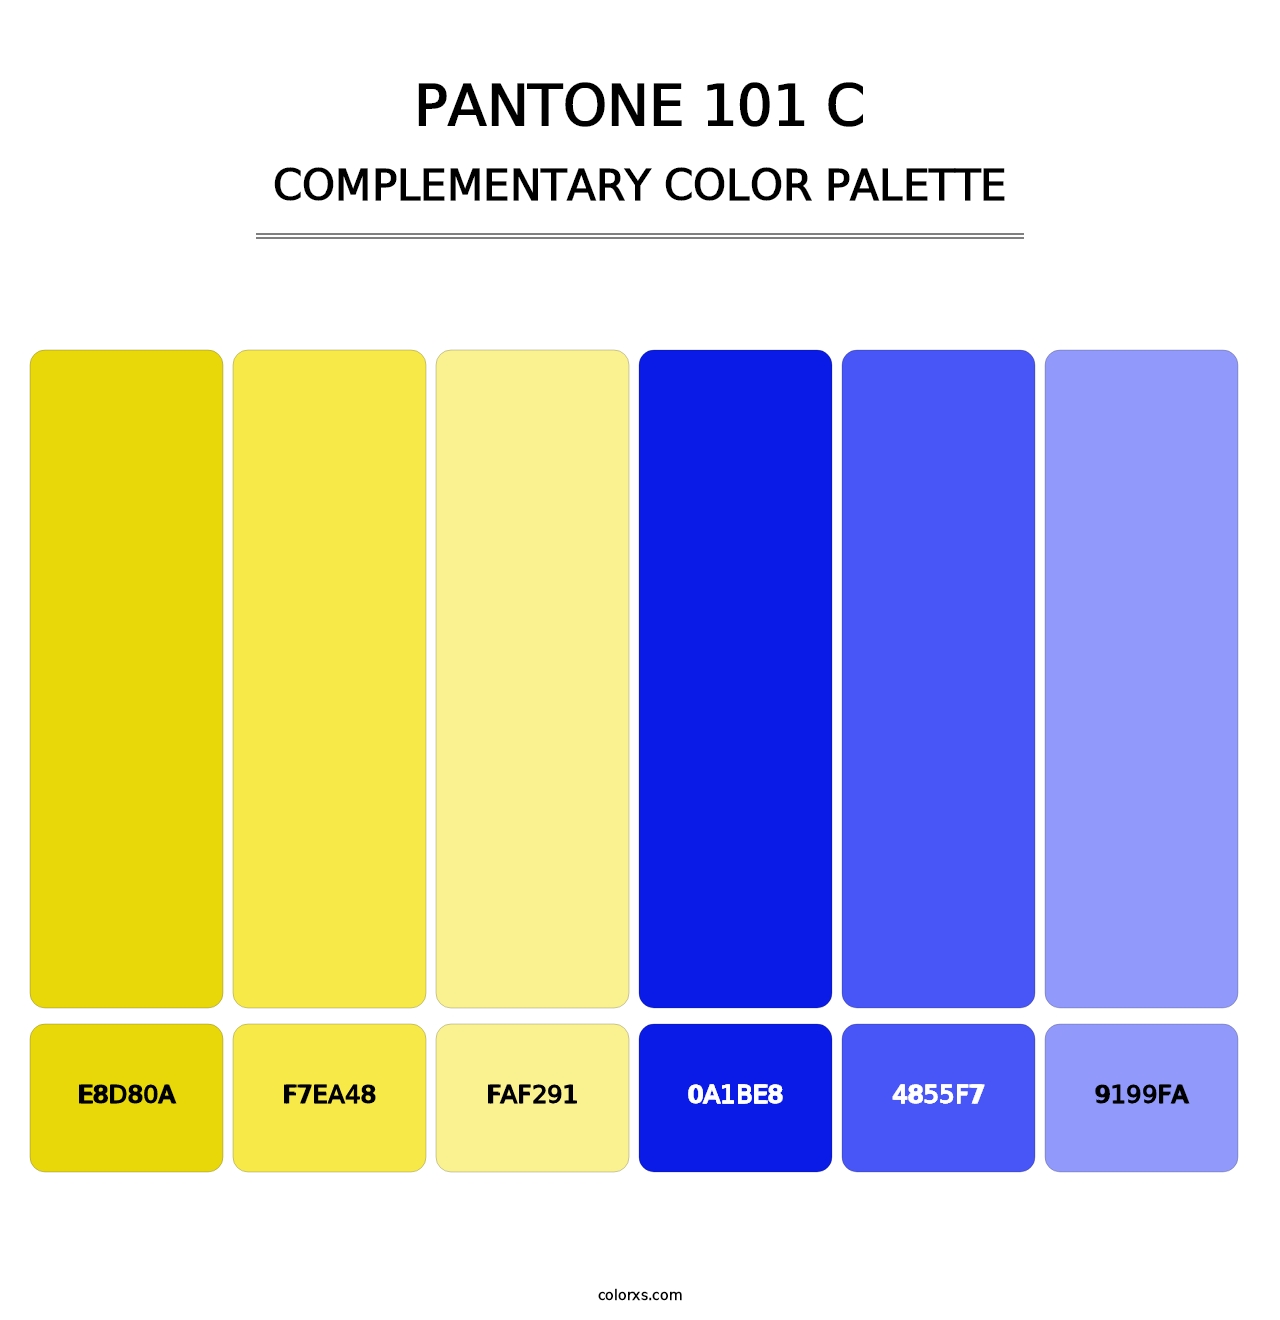 PANTONE 101 C - Complementary Color Palette